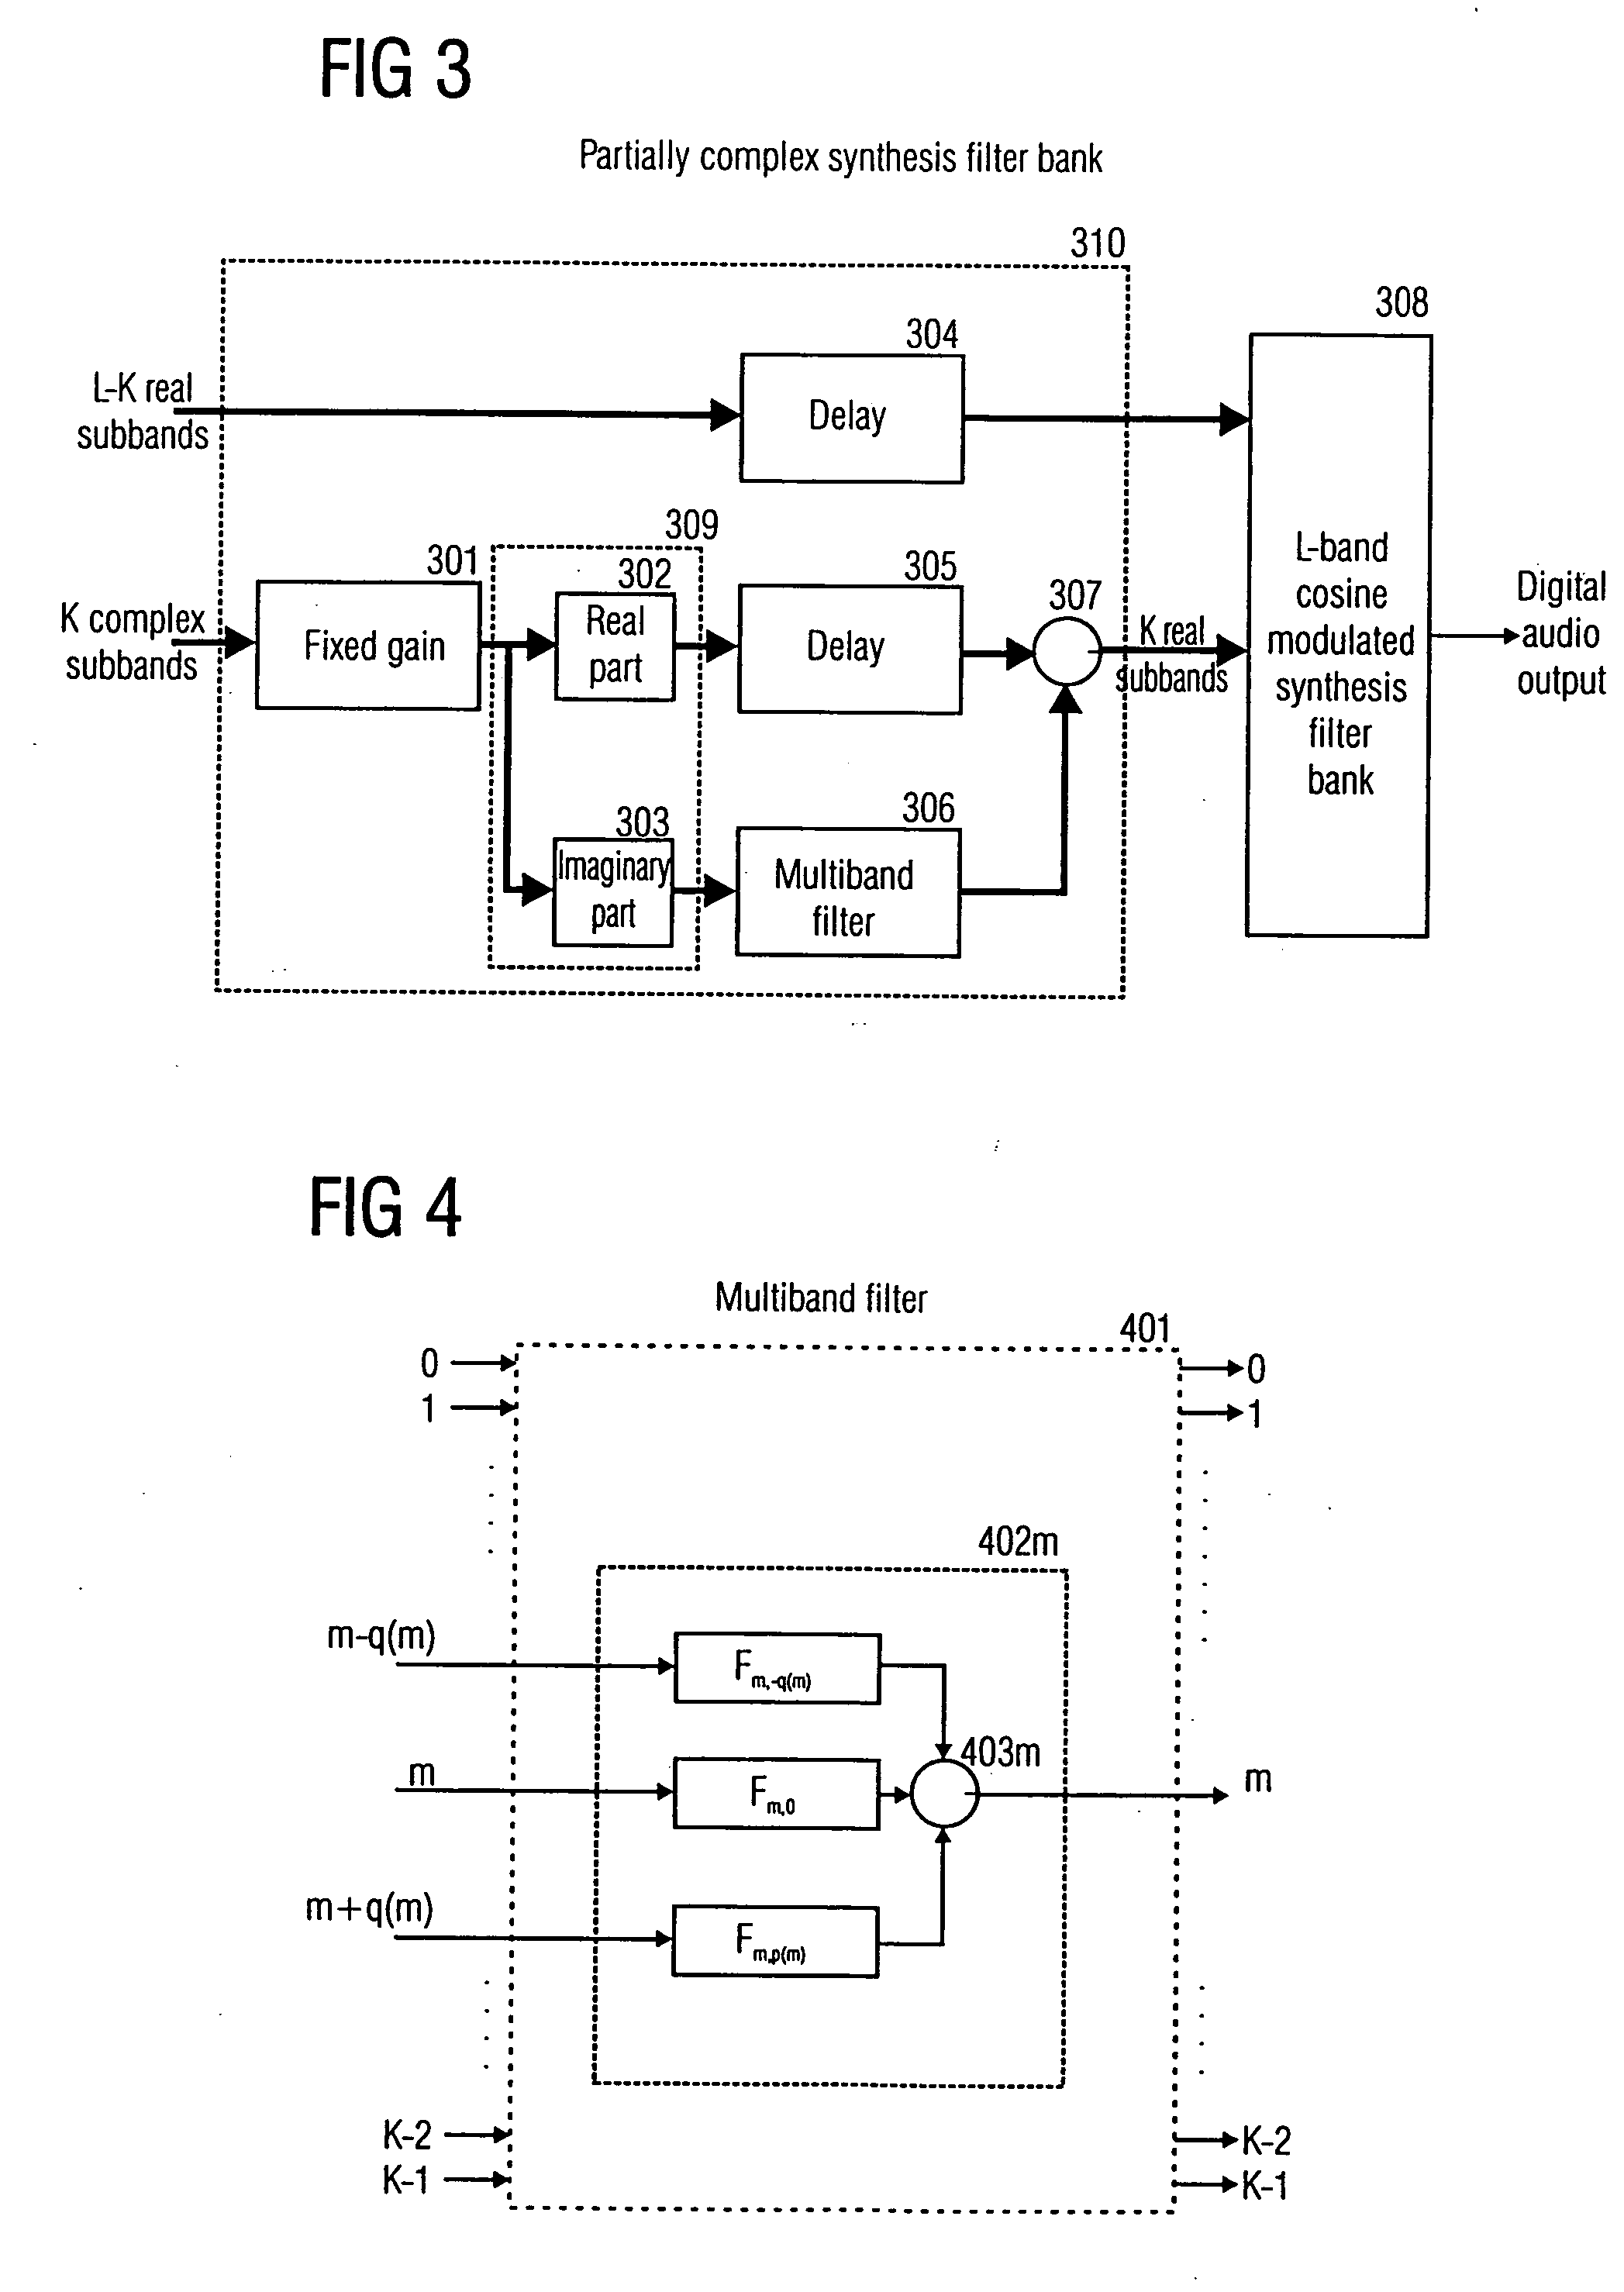 Partially complex modulated filter bank